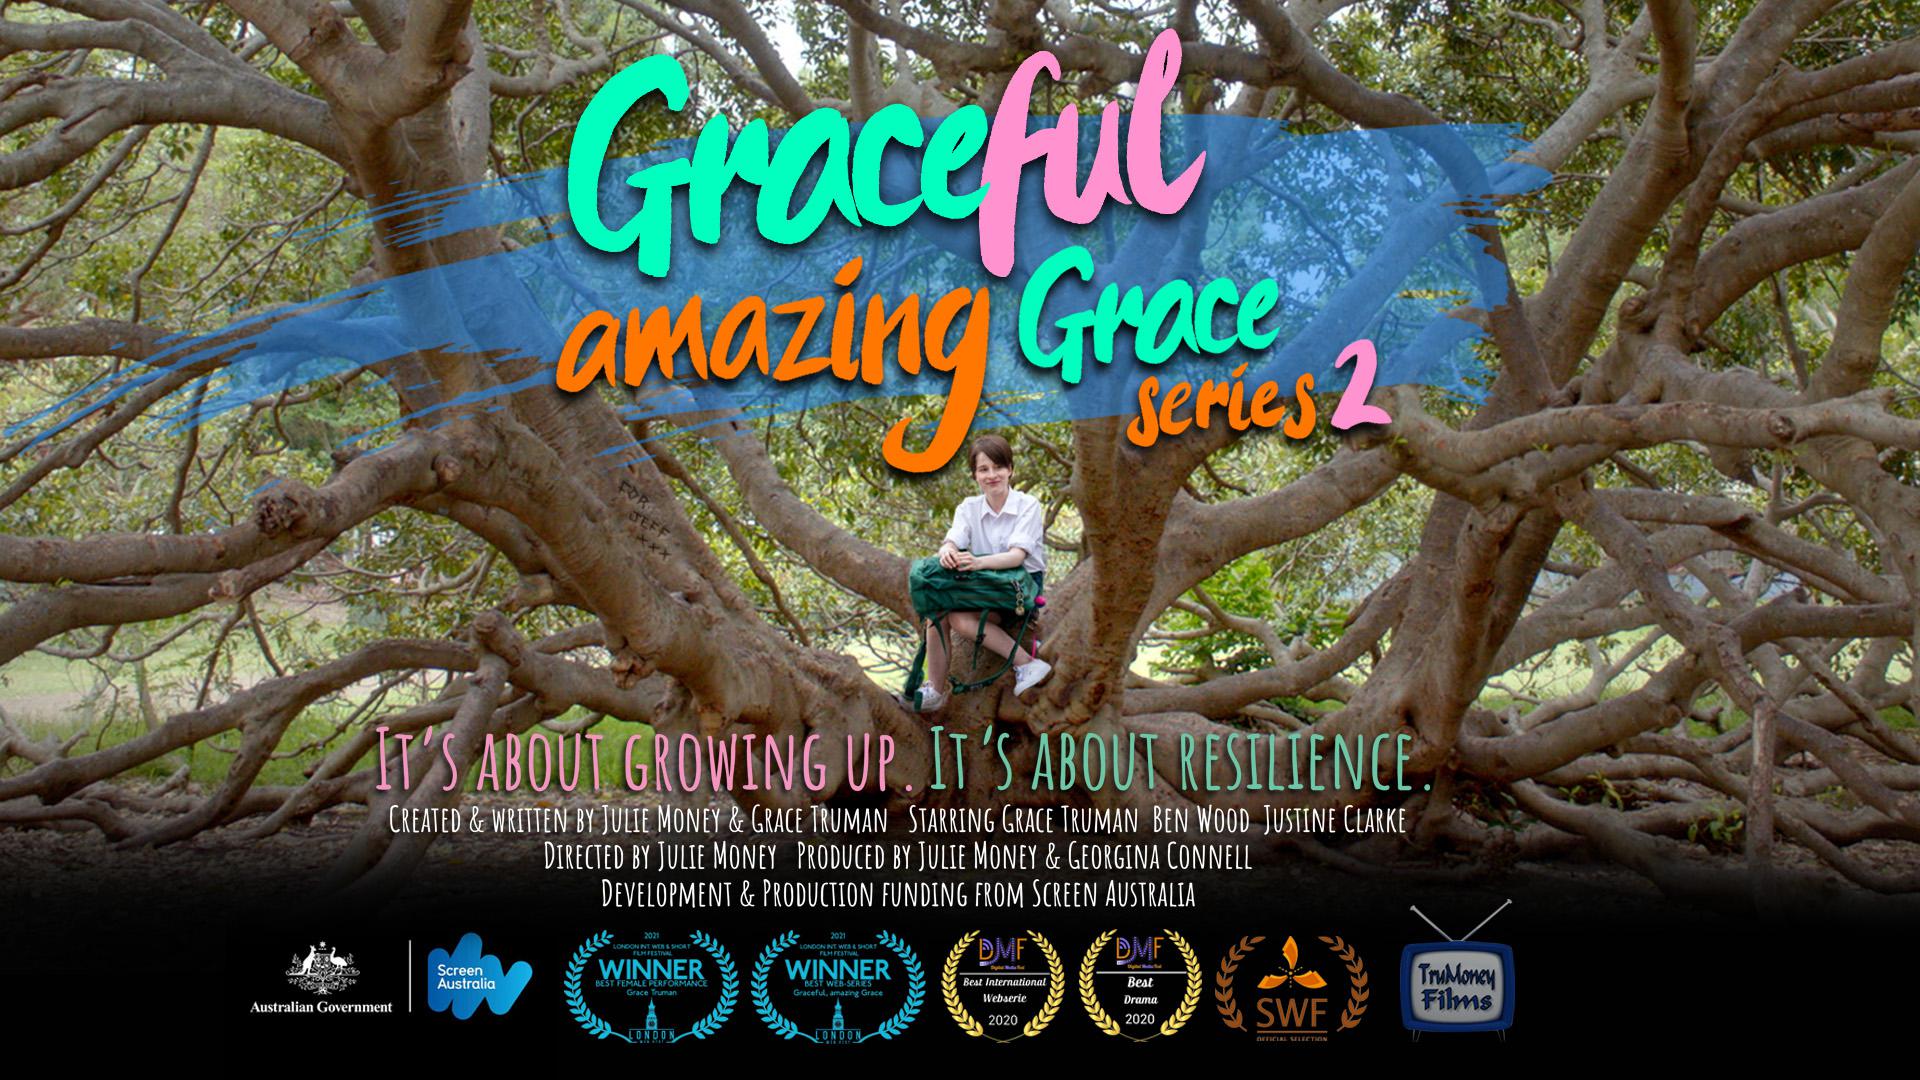 Graceful, amazing Grace series 2